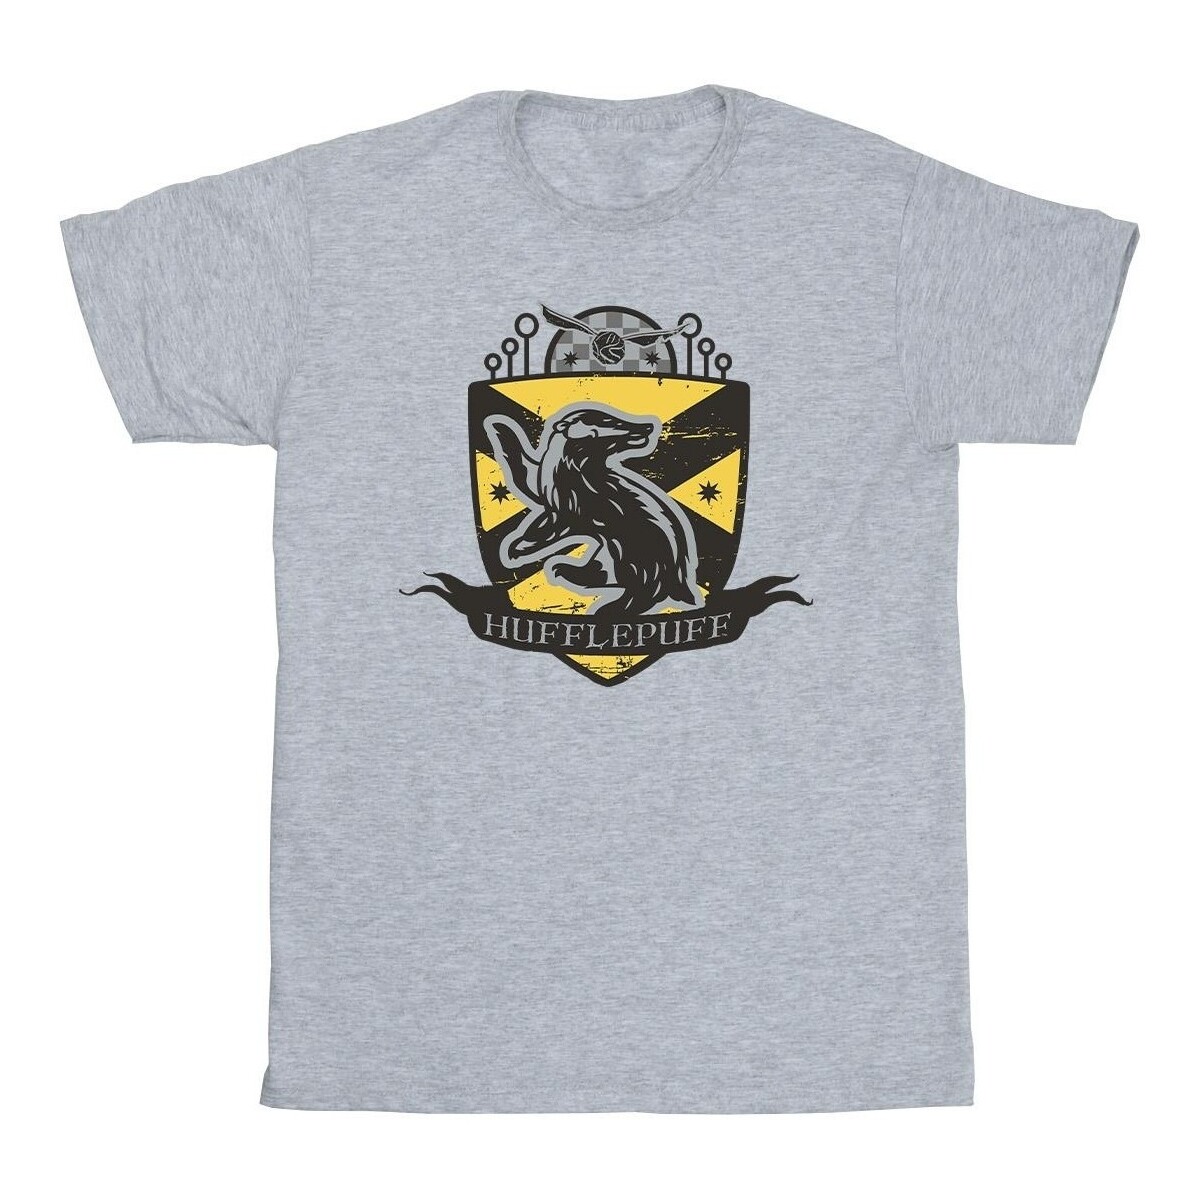 Vêtements Garçon T-shirts manches courtes Harry Potter Hufflepuff Chest Badge Gris